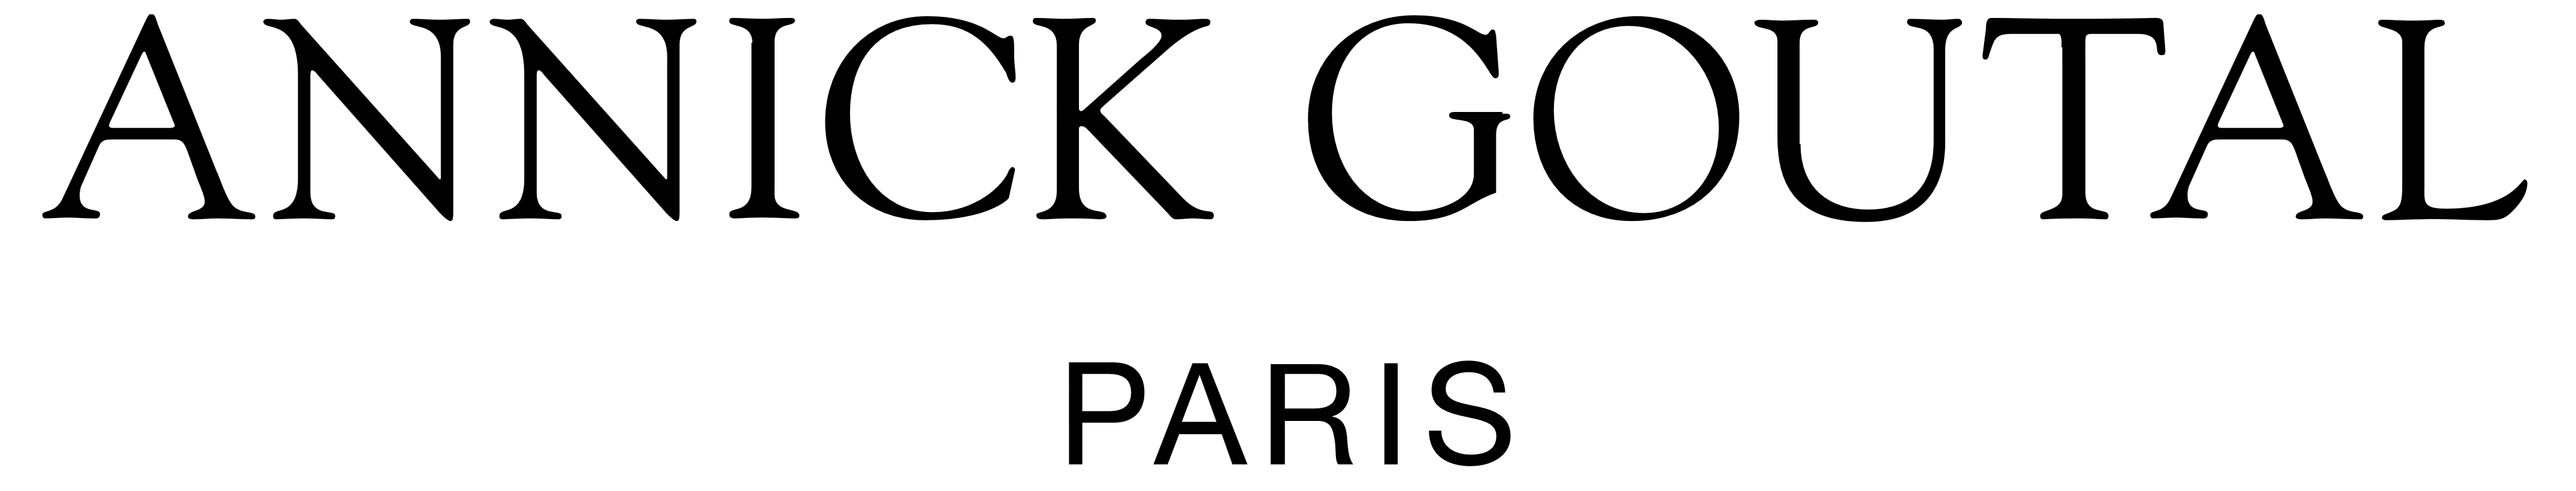 Annick Goutal logo & Ohana & co